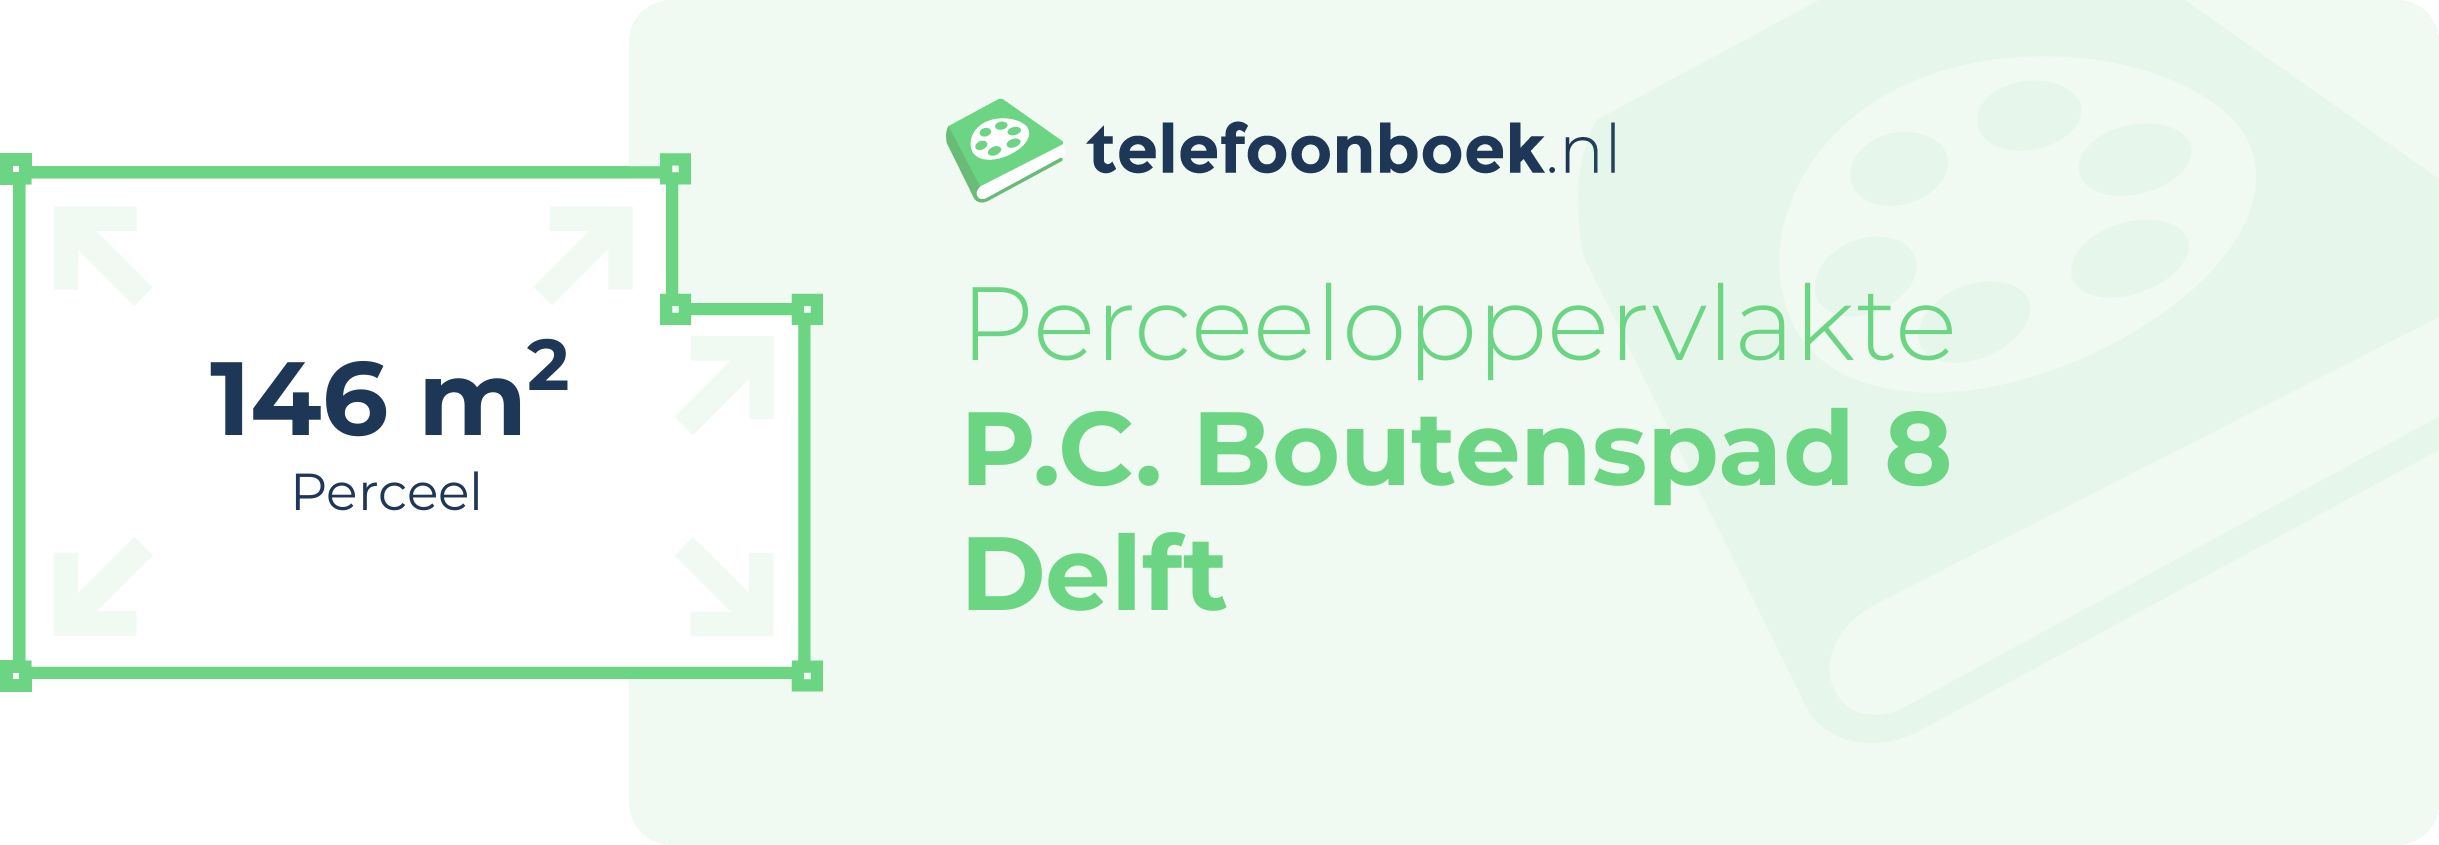 Perceeloppervlakte P.C. Boutenspad 8 Delft